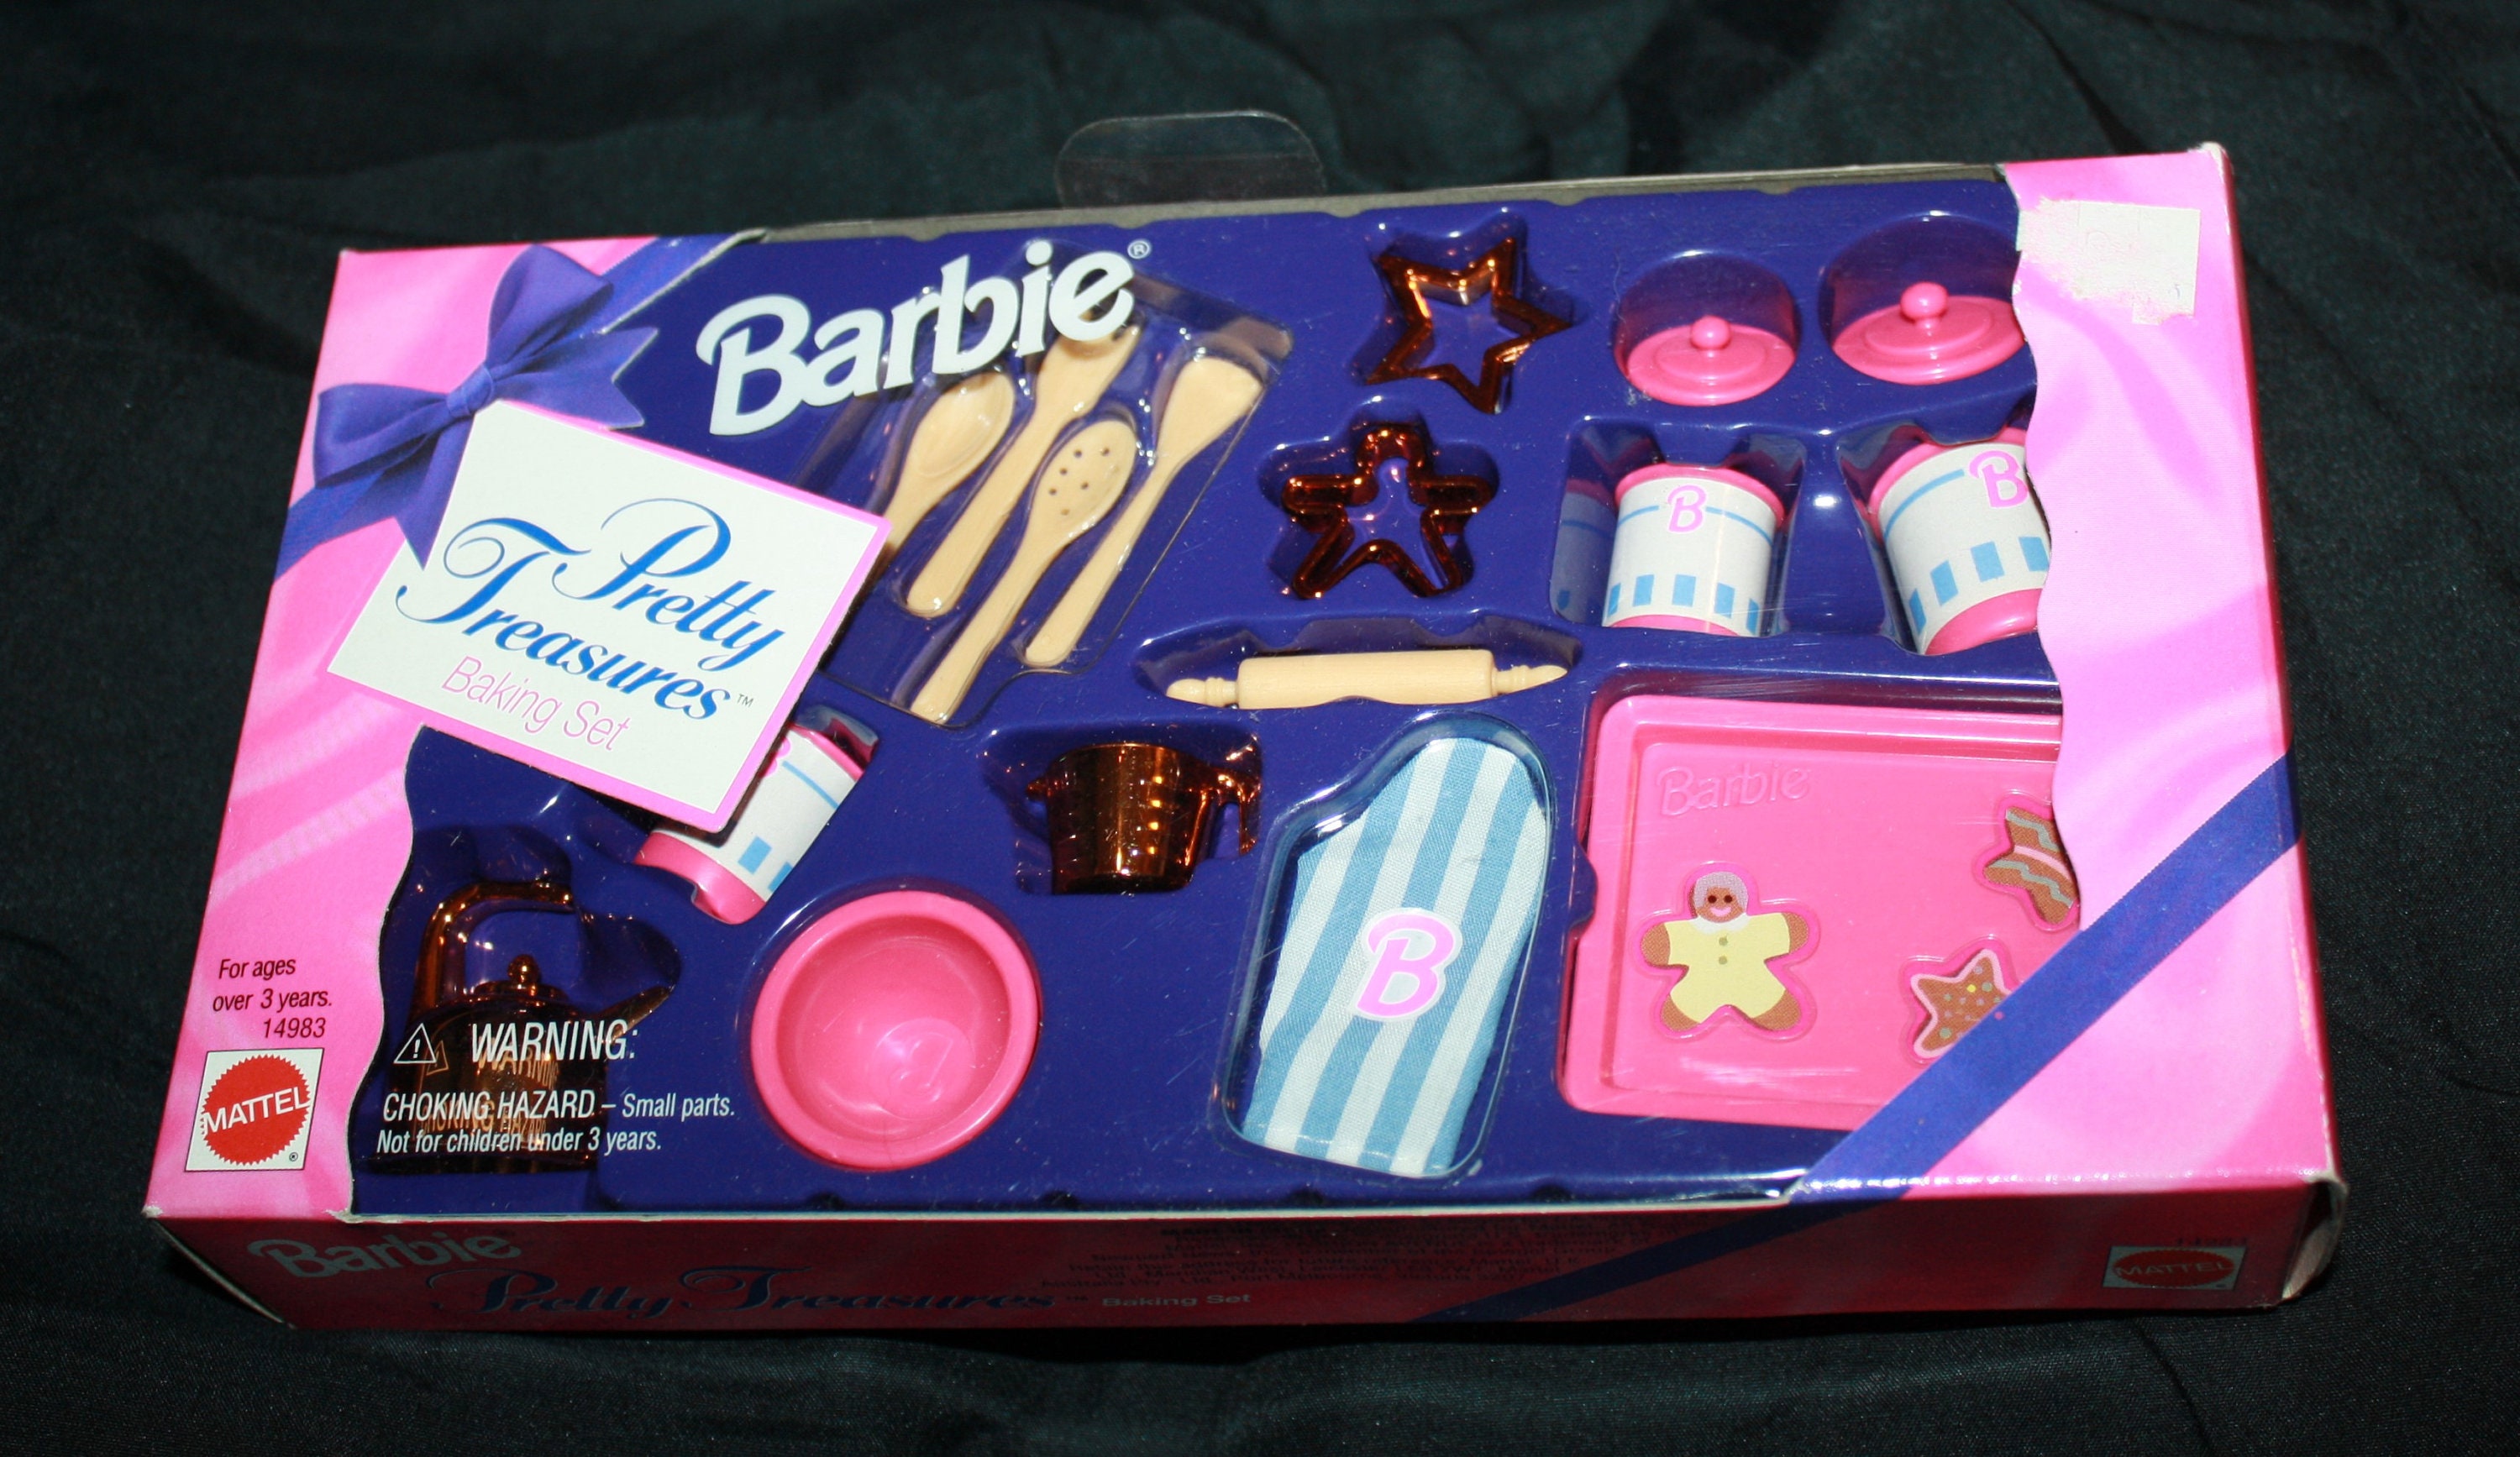 1996 Barbie Pretty Treasures Baking Set 14983 Mattel for sale online 